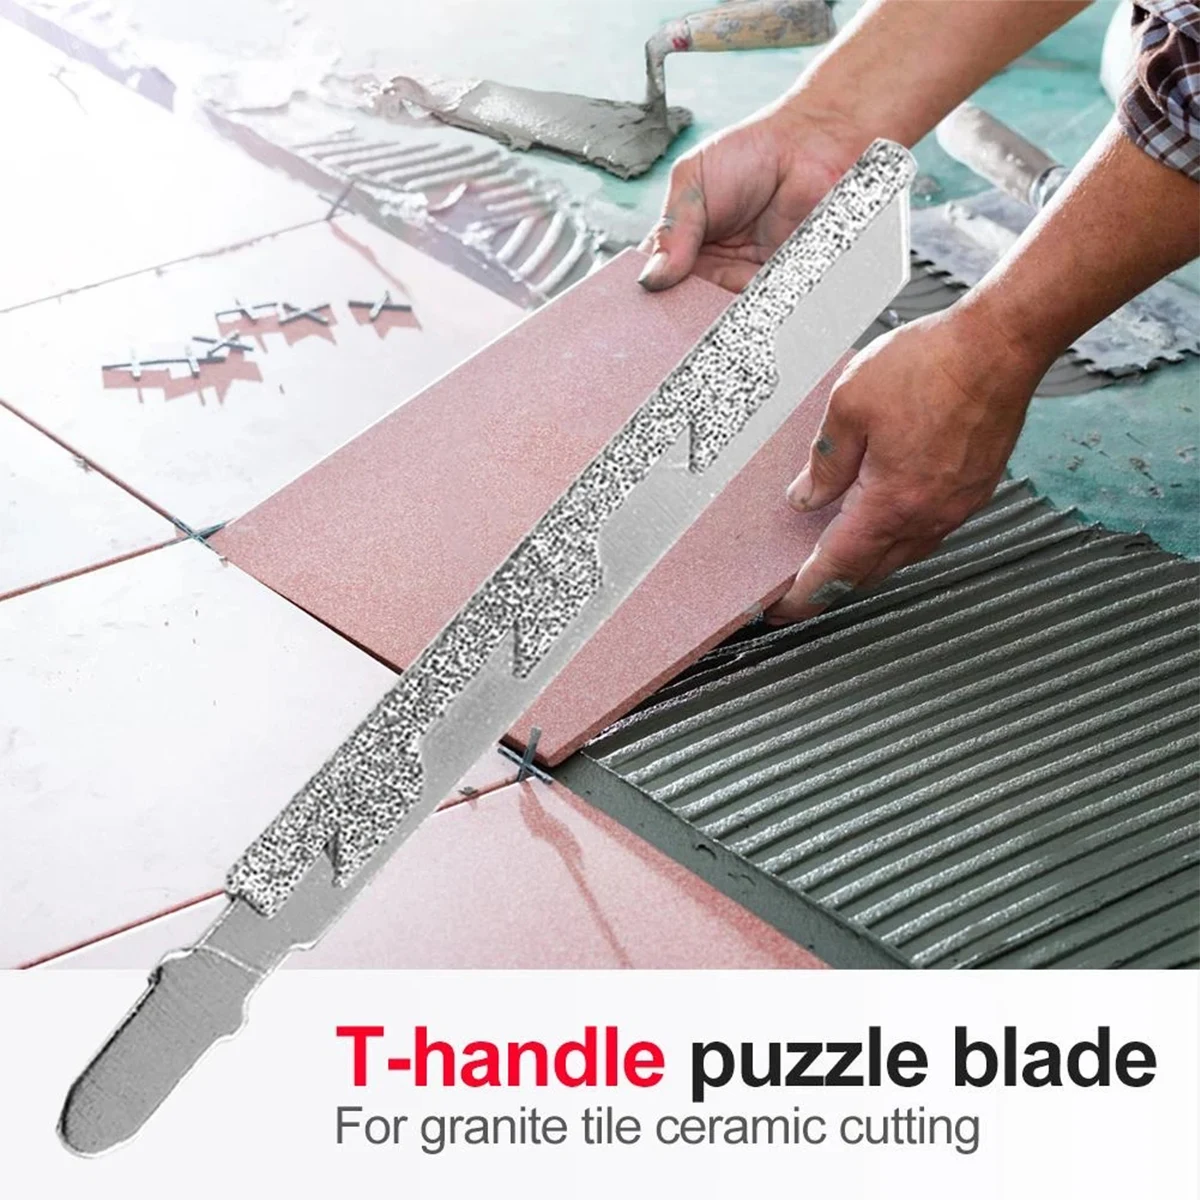 1pc Jig Saw Blade Alloy Diamond Assorted Blades T-shank 40 Grit Jigsaw Blades Fast Cut Down Jig Saw Cutter for Granite Ceramic